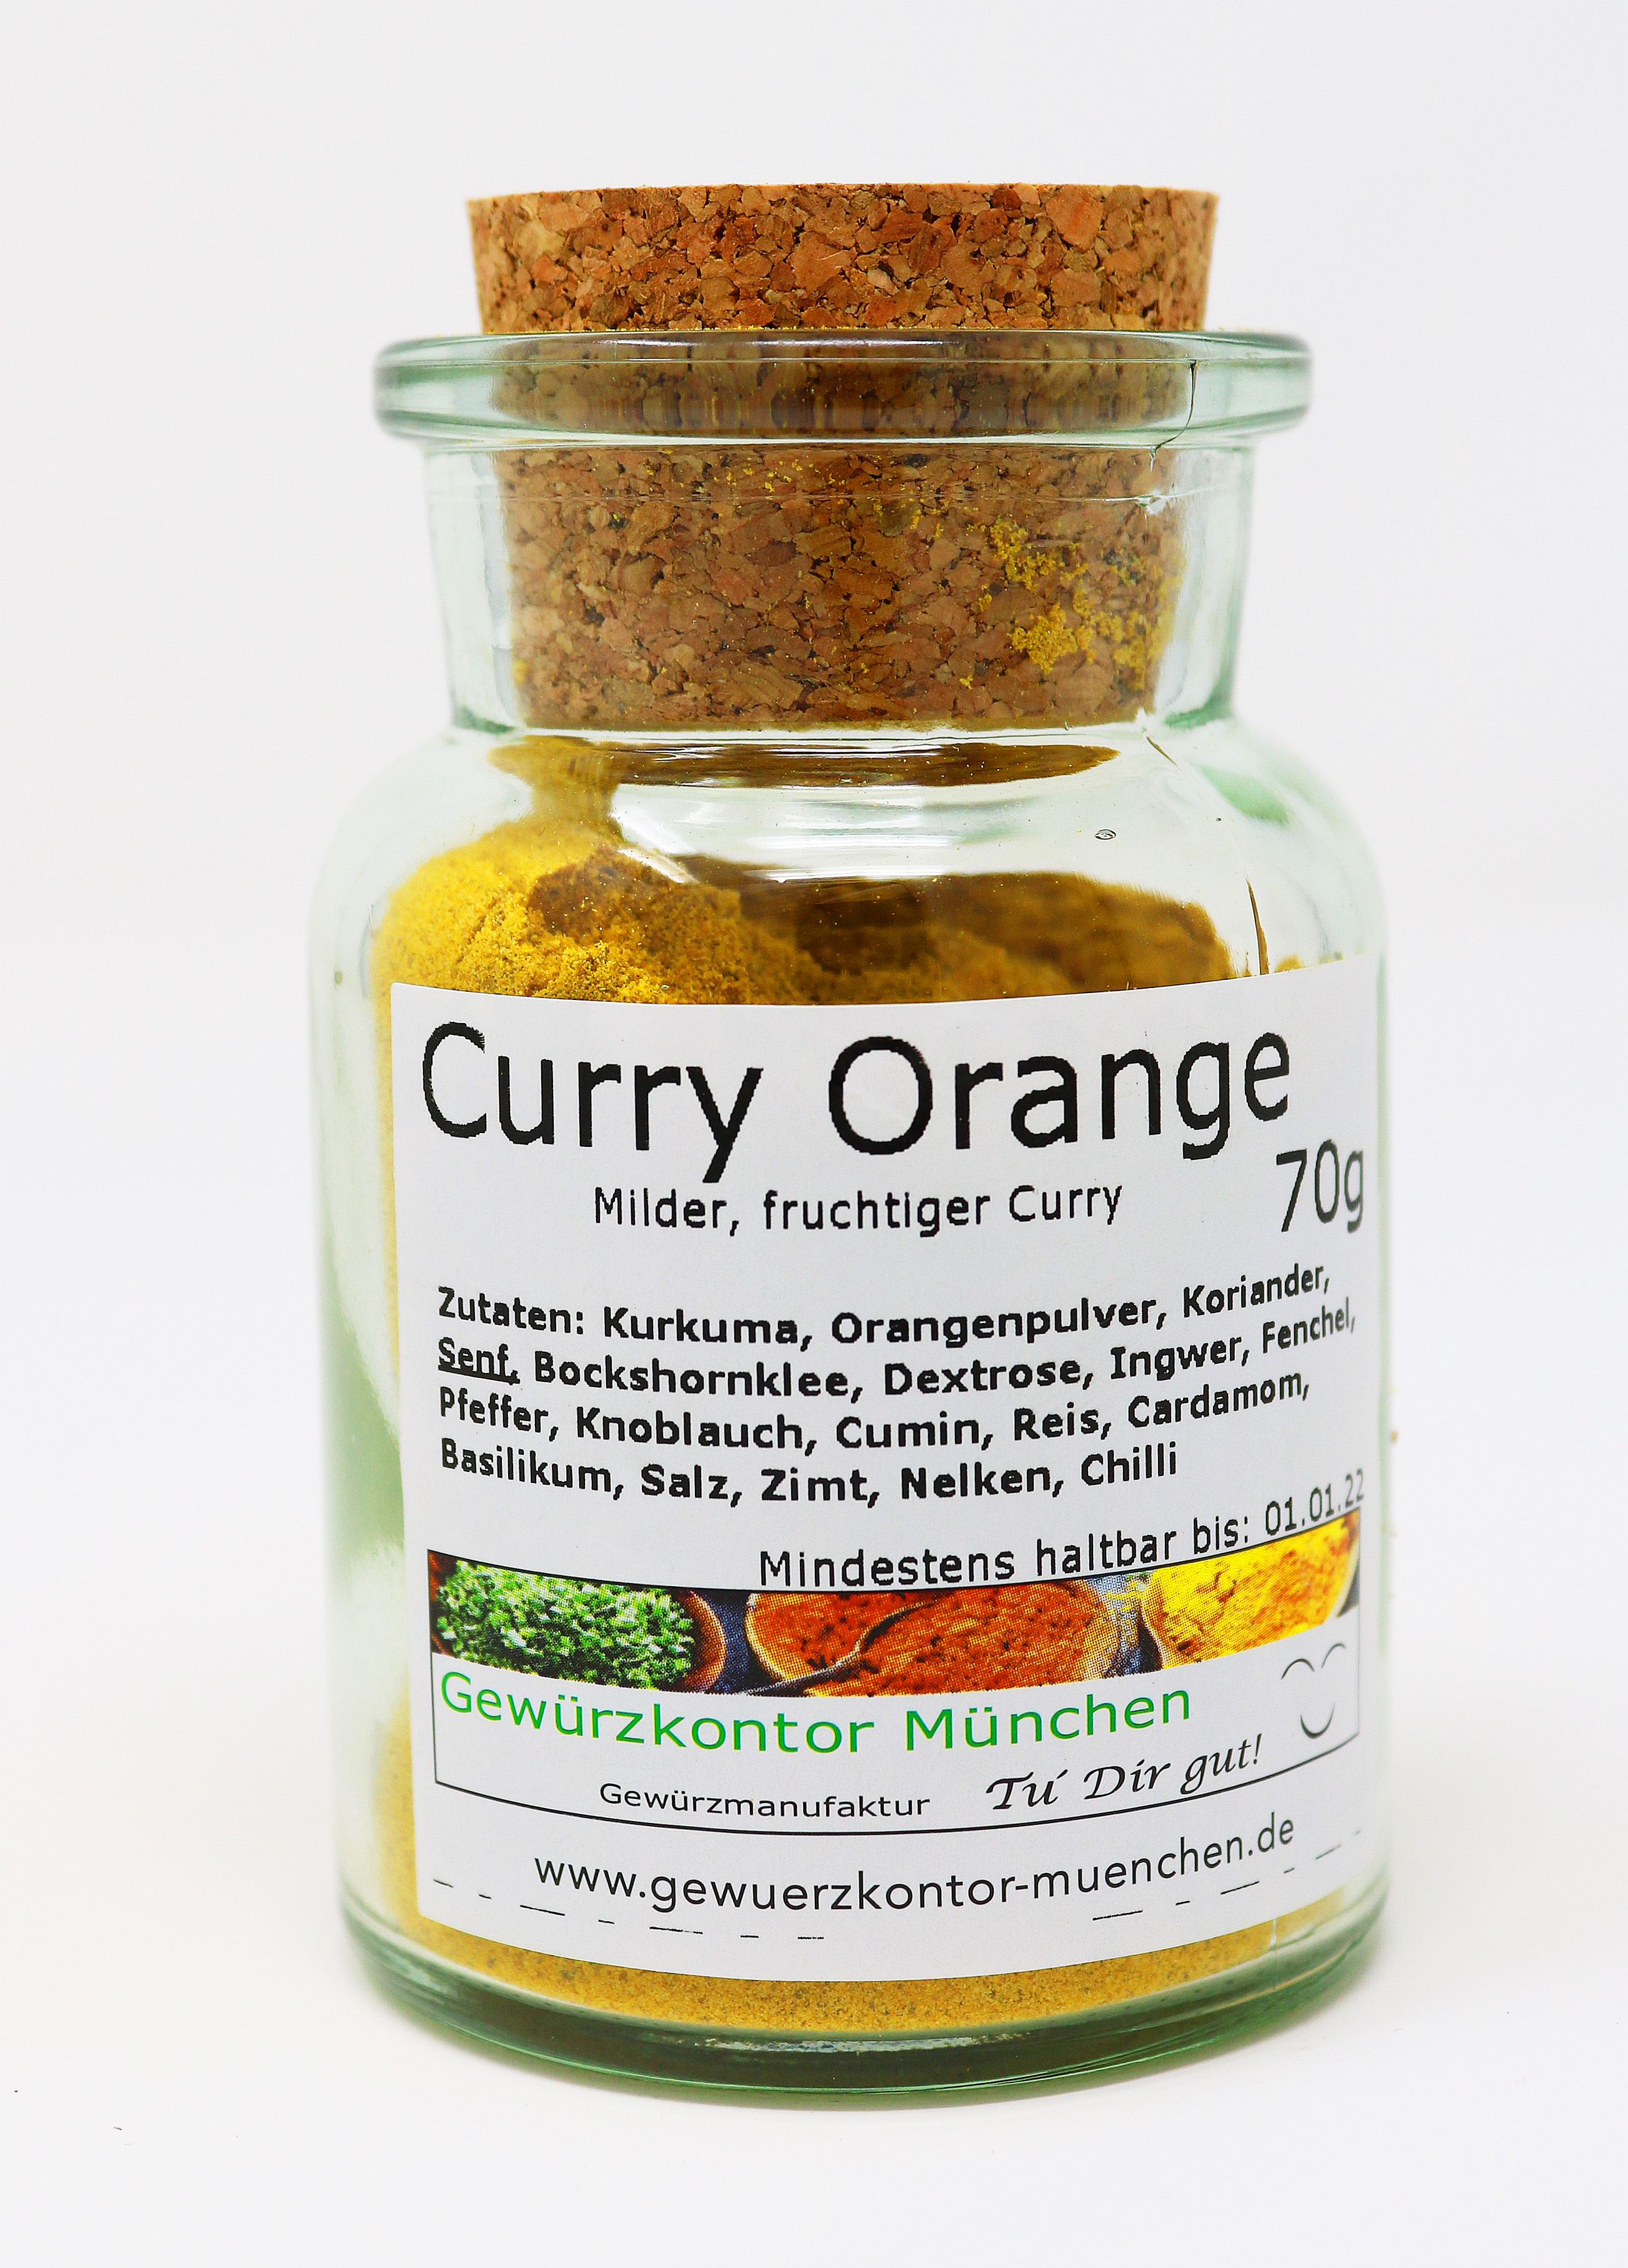 Curry Orange 70g im Glas